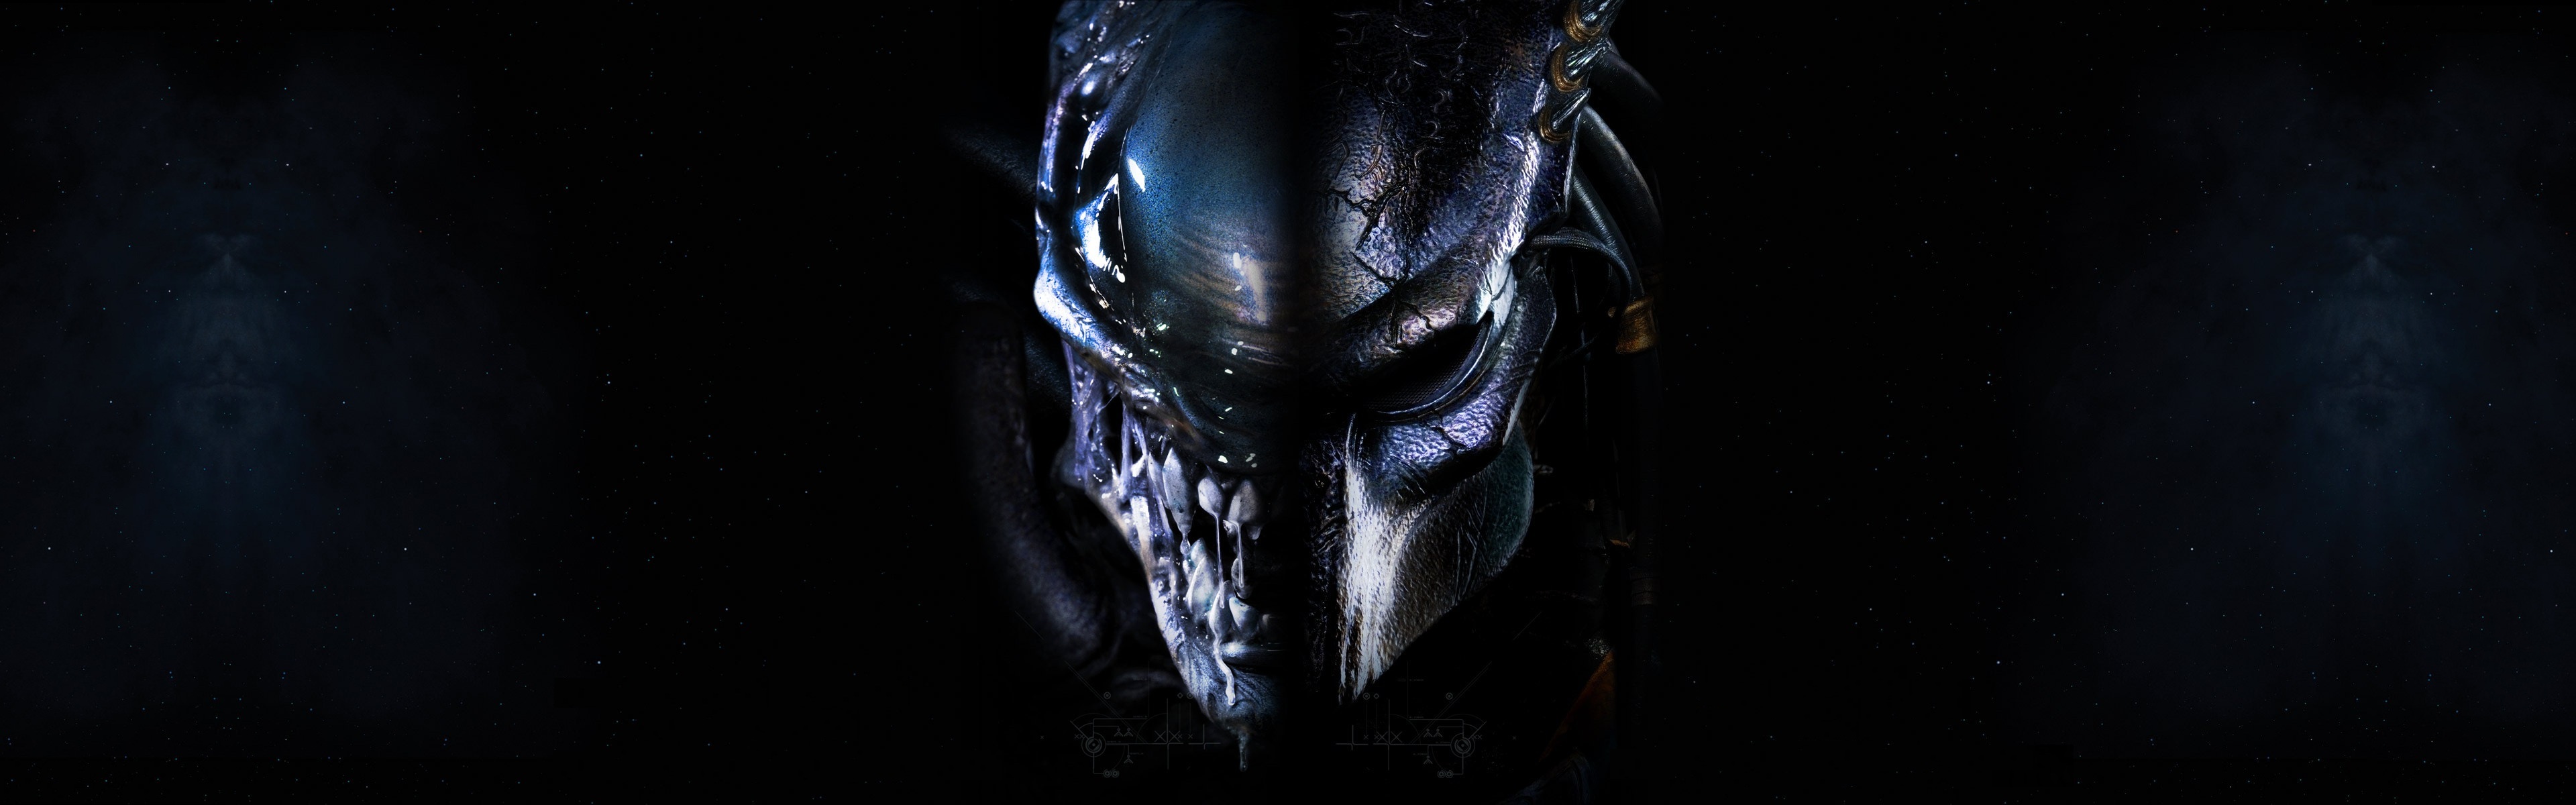 Desktop Backgrounds Avp: Alien Vs Predator 